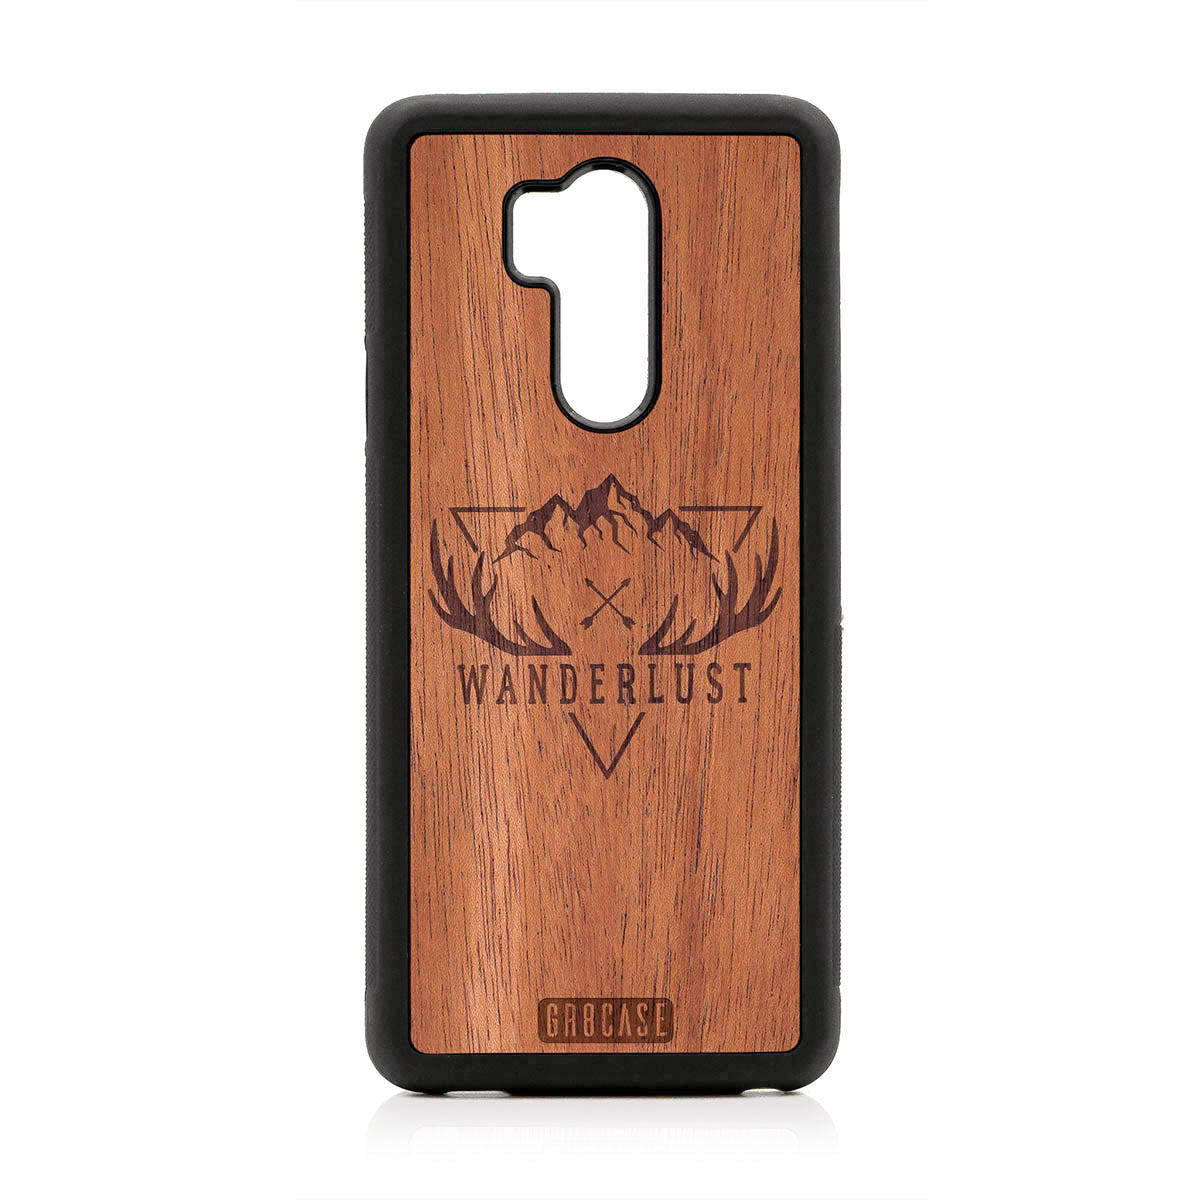 Wanderlust Design Wood Case For LG G7 ThinQ